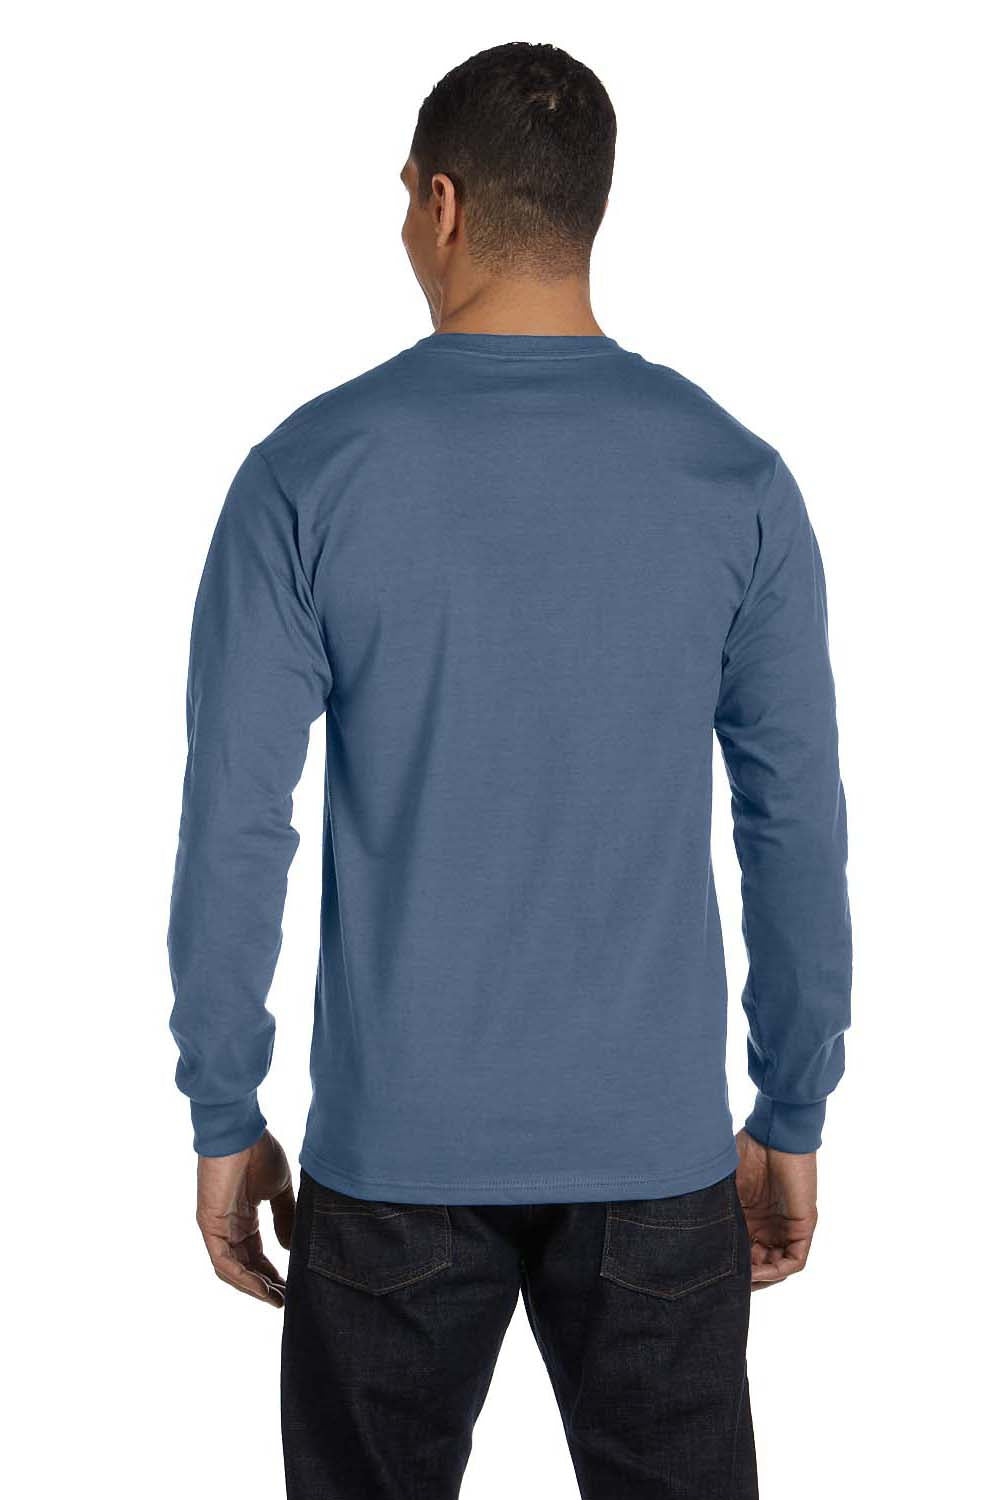 Hanes 5186 Mens Beefy-T Long Sleeve Crewneck T-Shirt Denim Blue Back